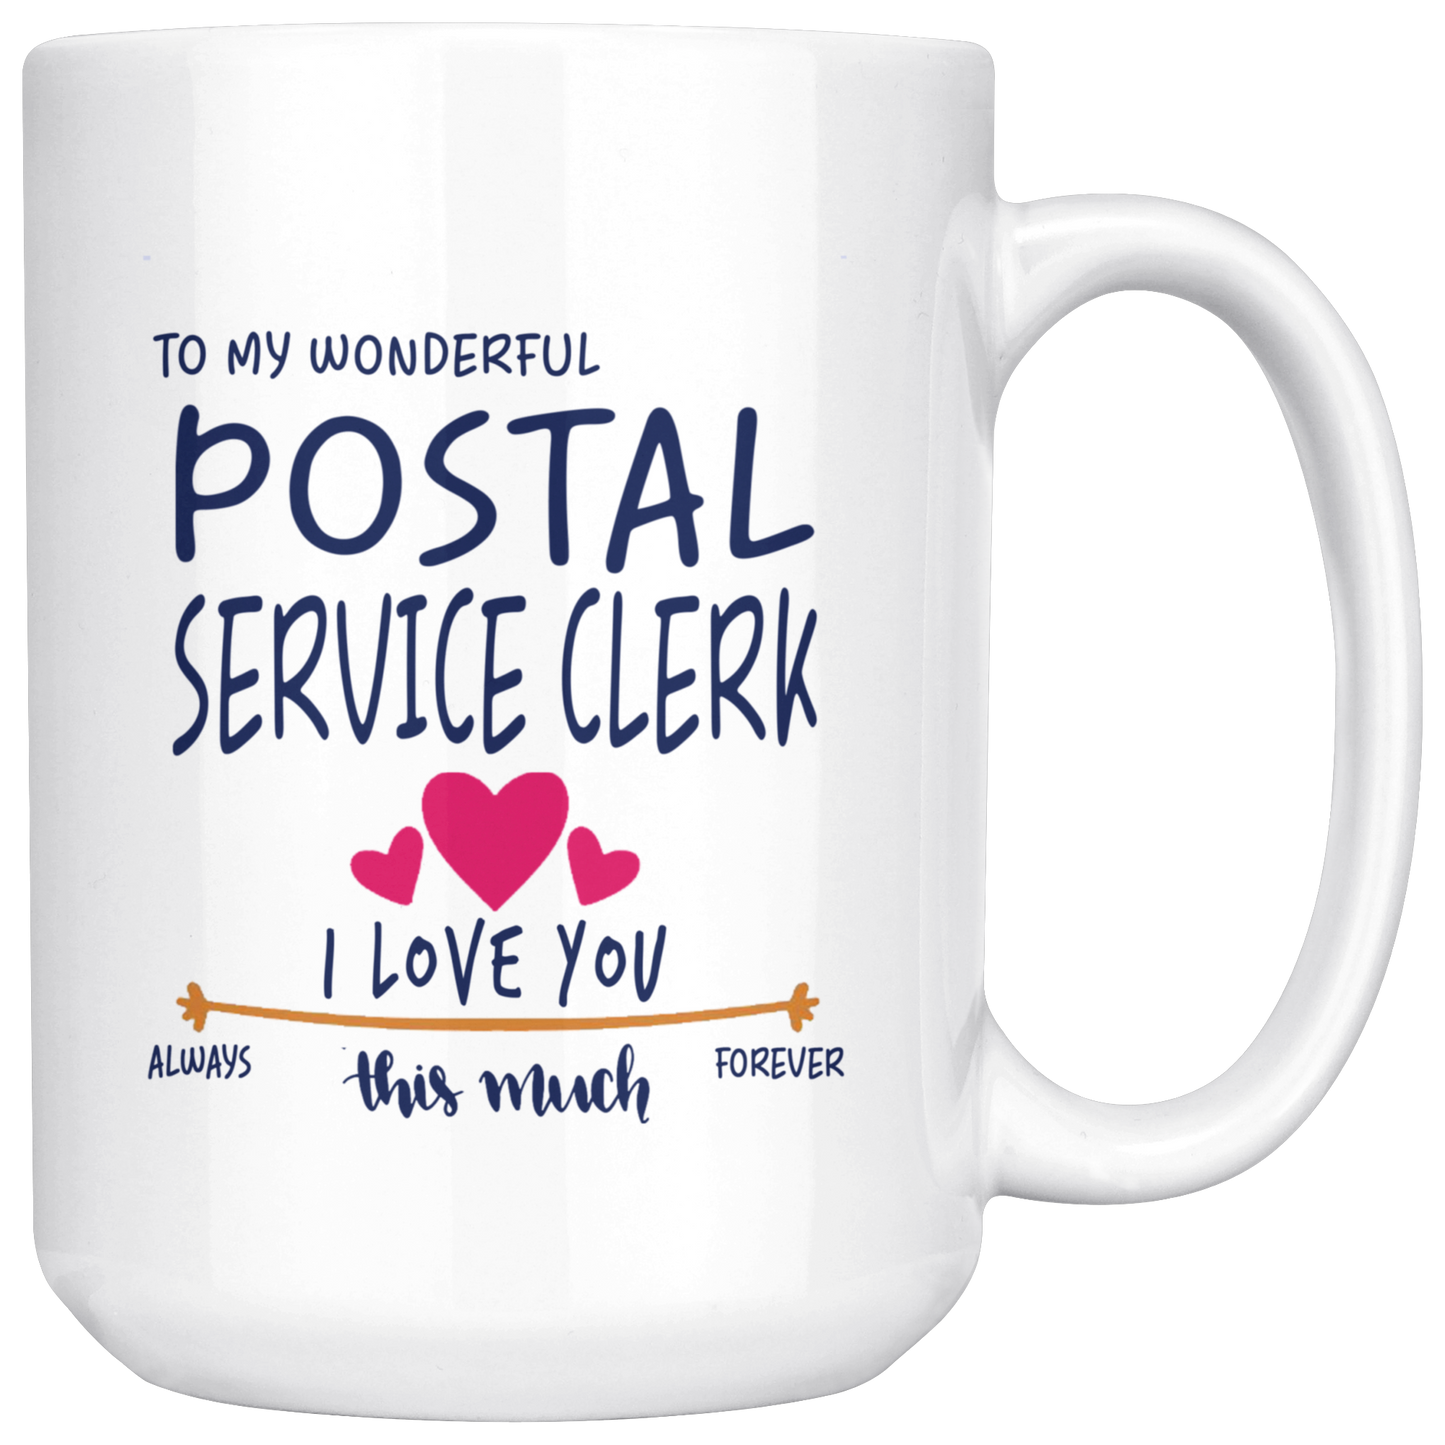 M-20410370-sp-23194 - New Job Mug Christmas - To My Wonderful Postal Service Clerk